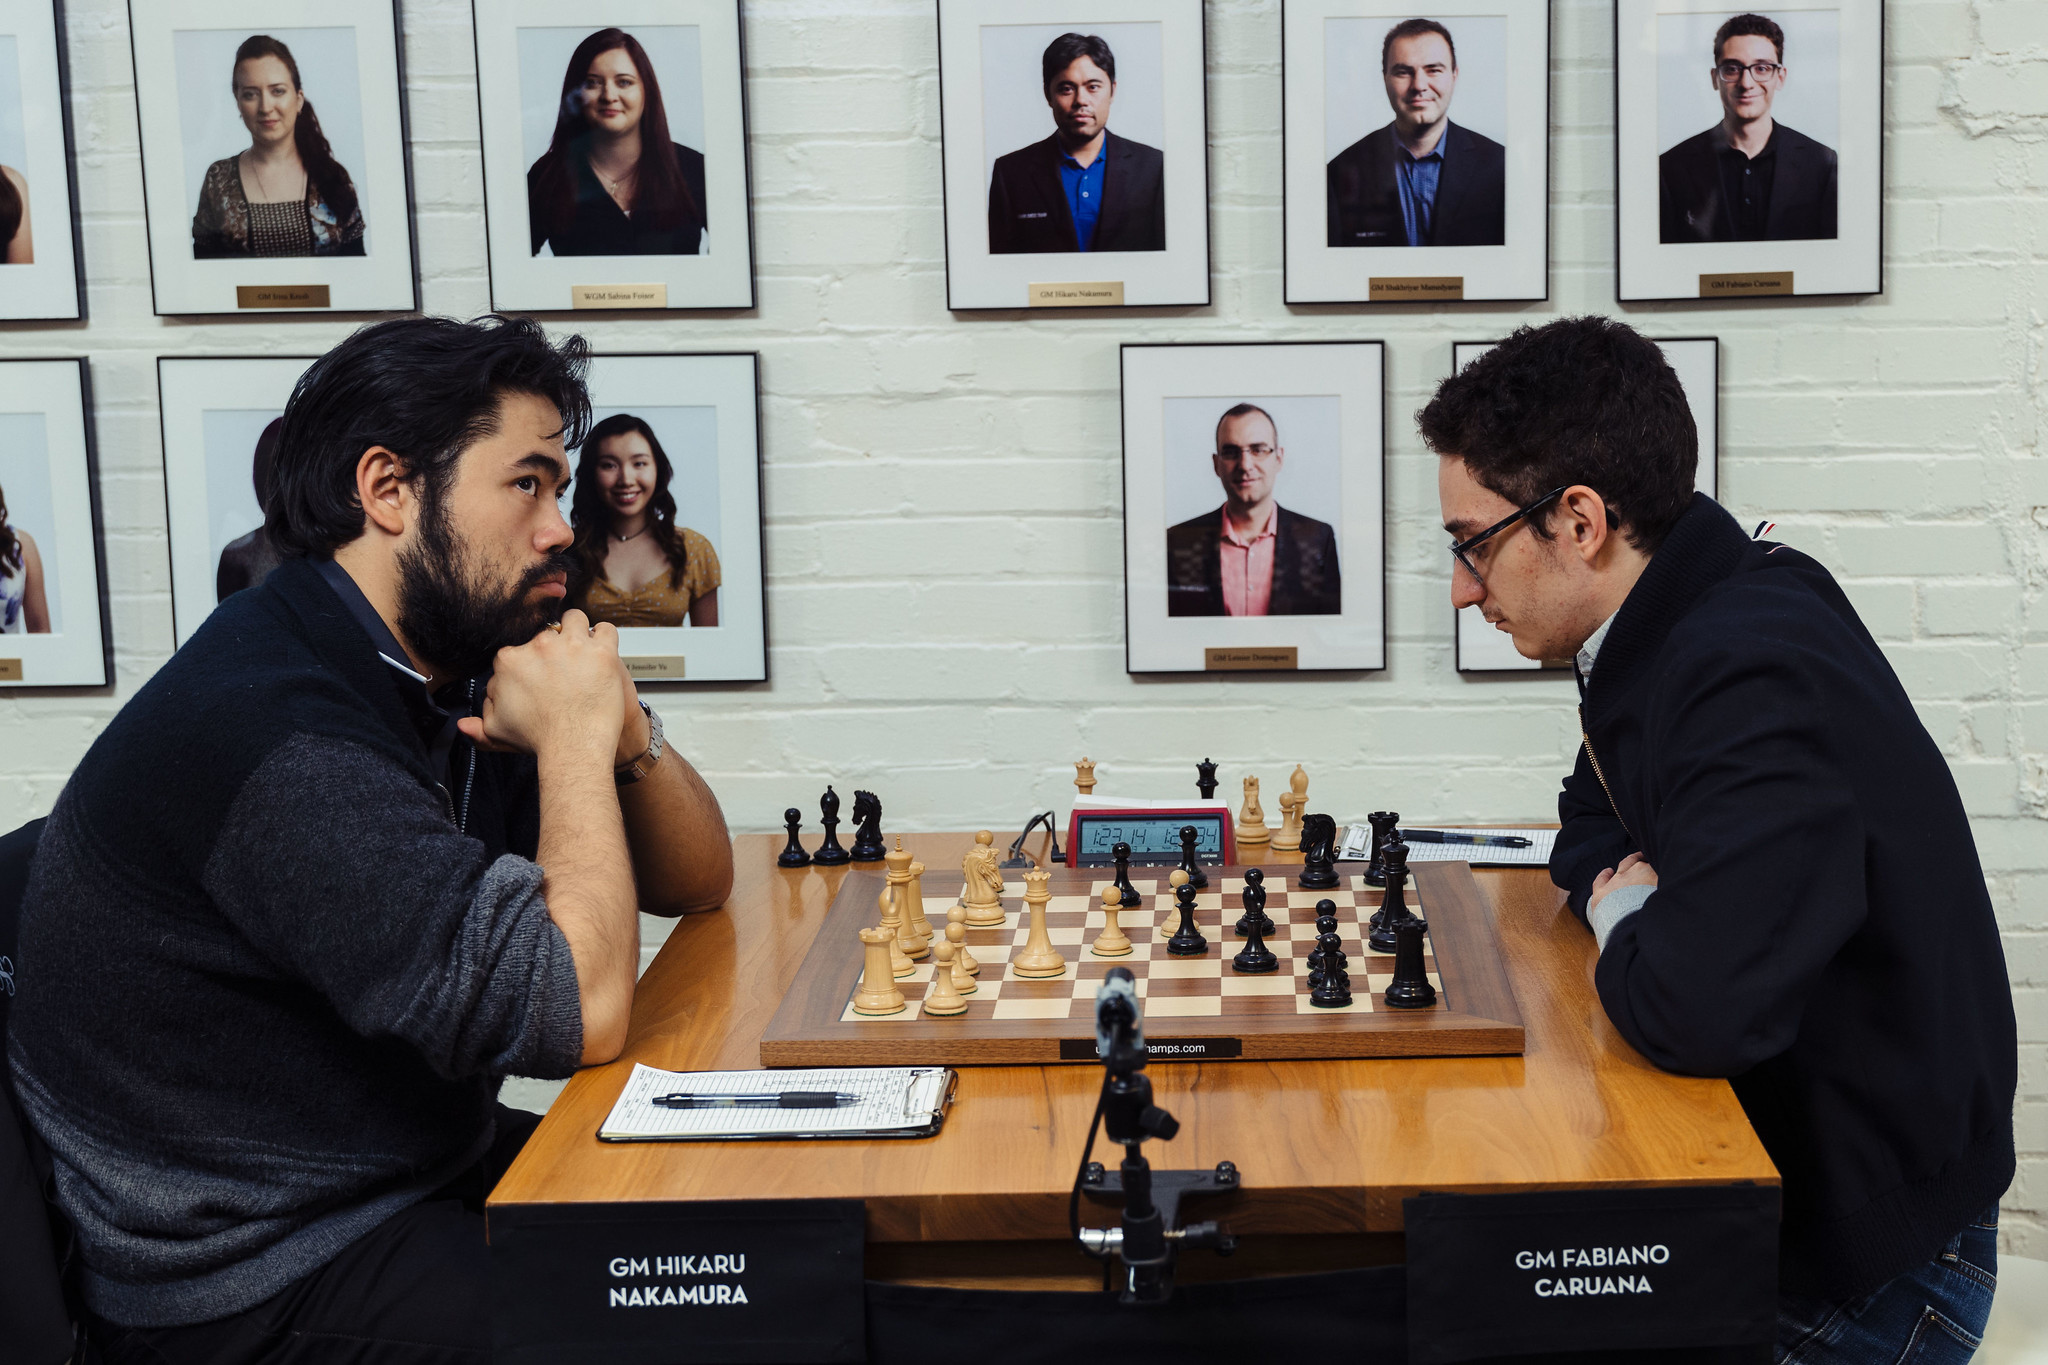 Chess! 2022 FIDE Candidates Tournament!